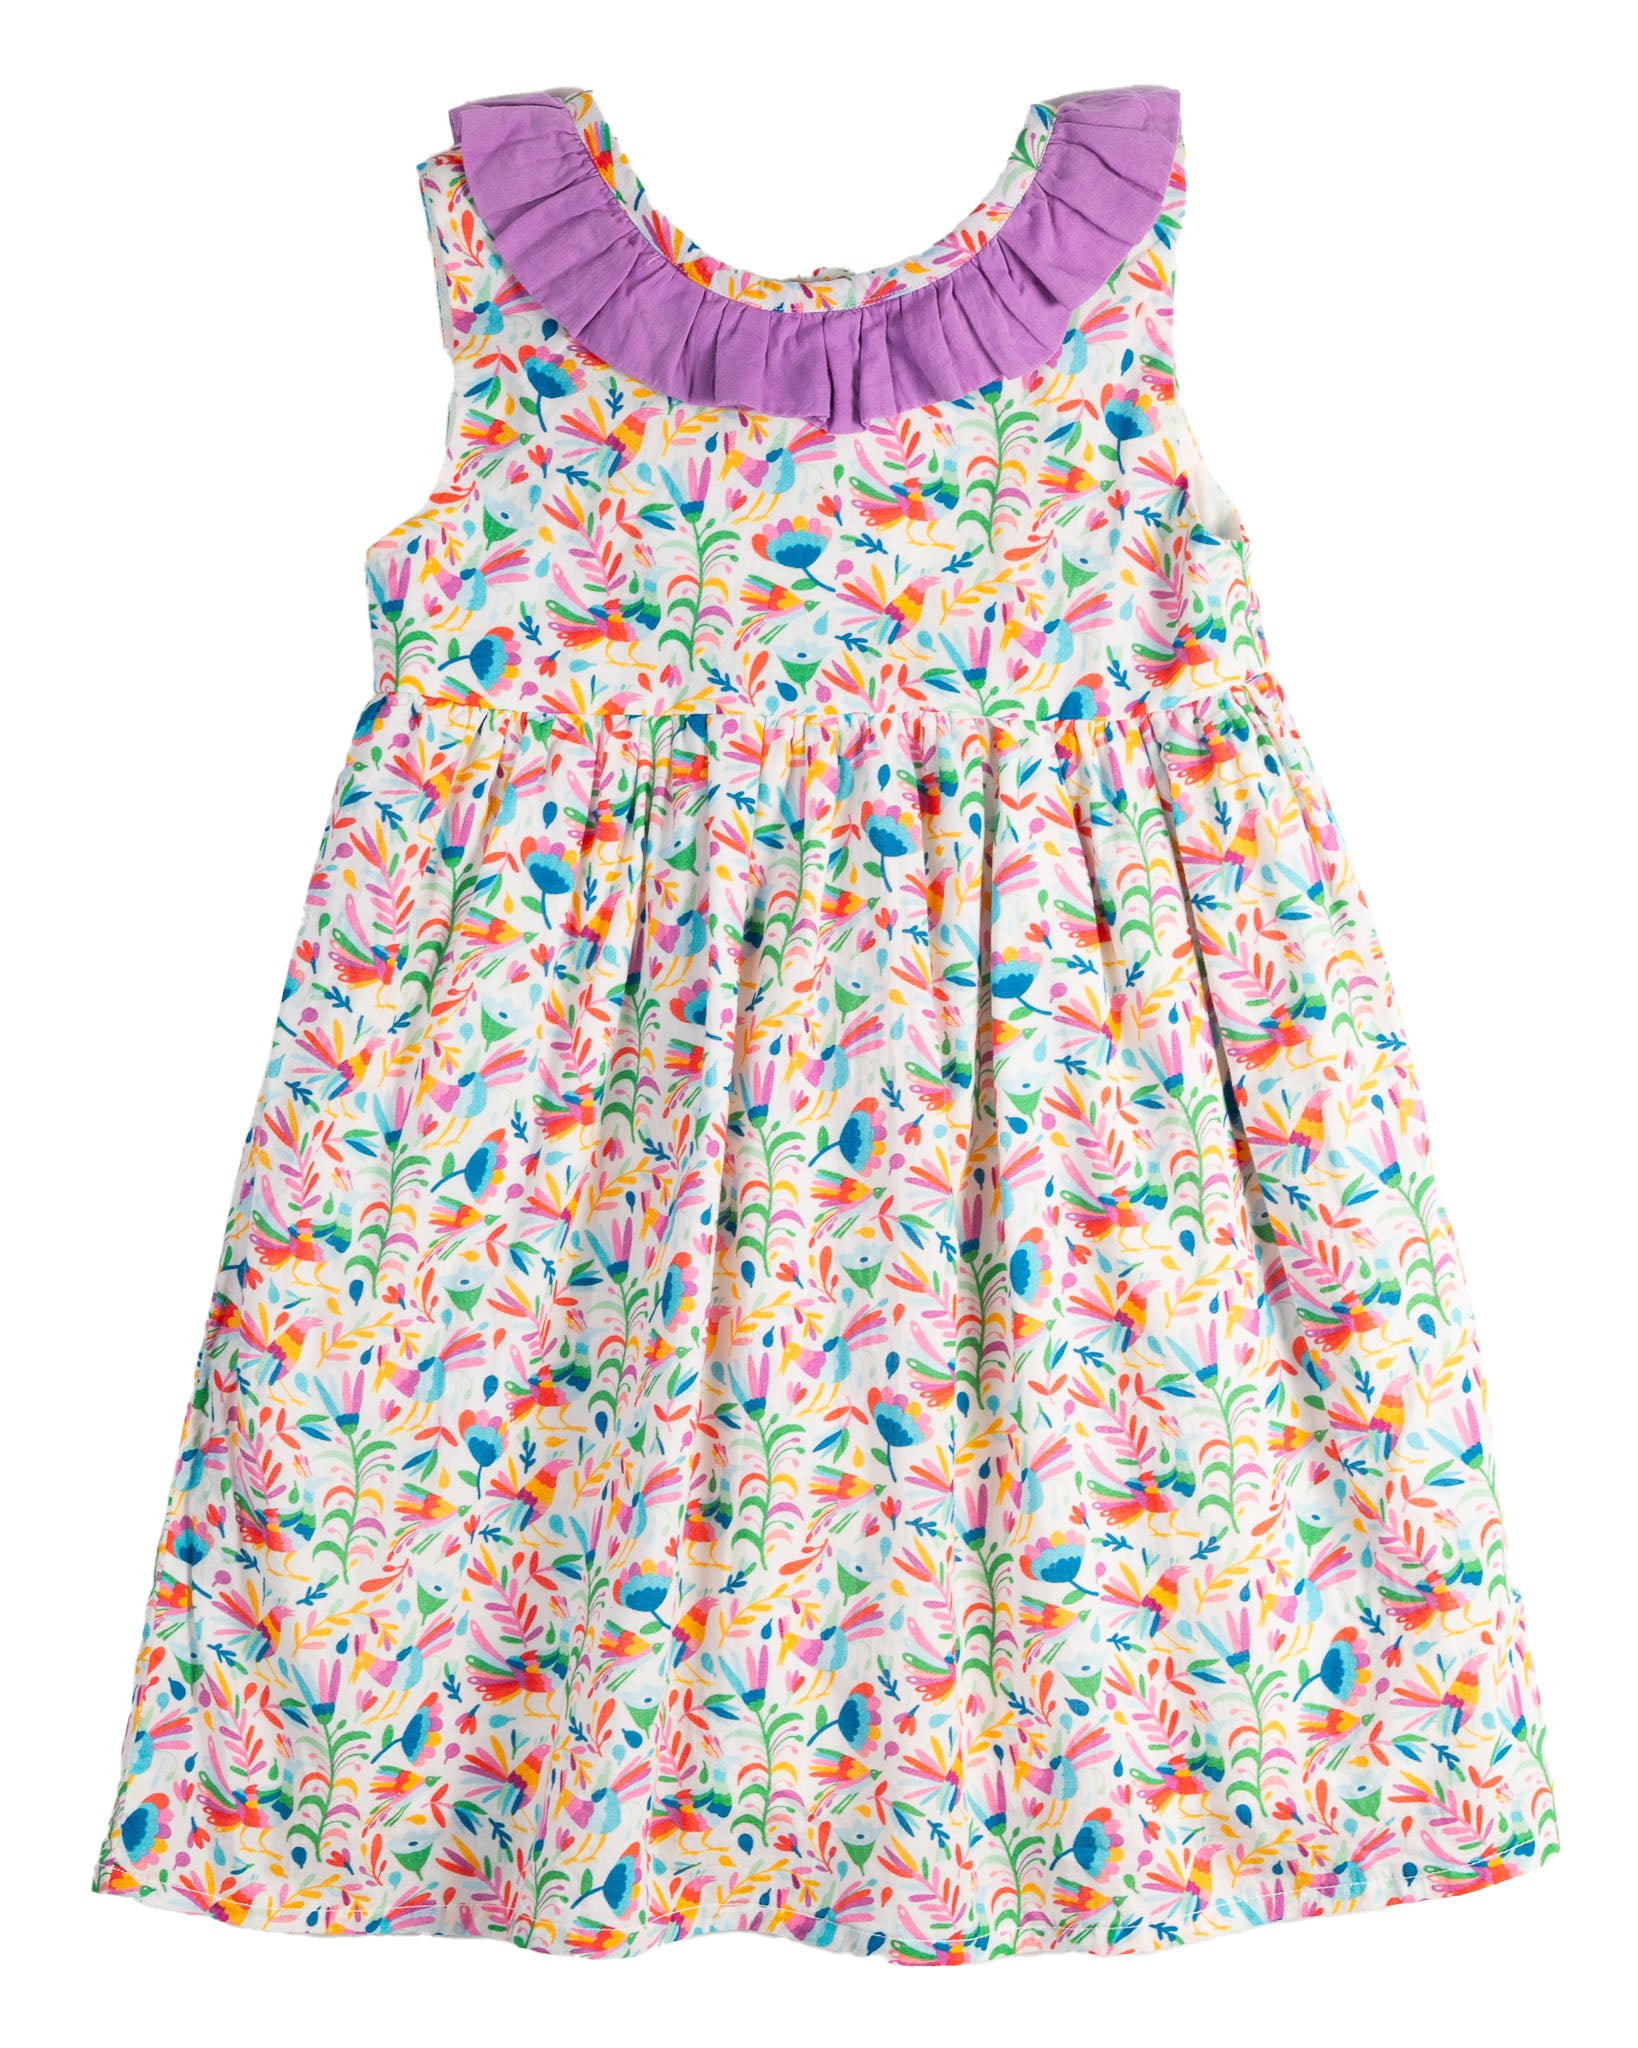 Colorful Otomi Cotton Dress